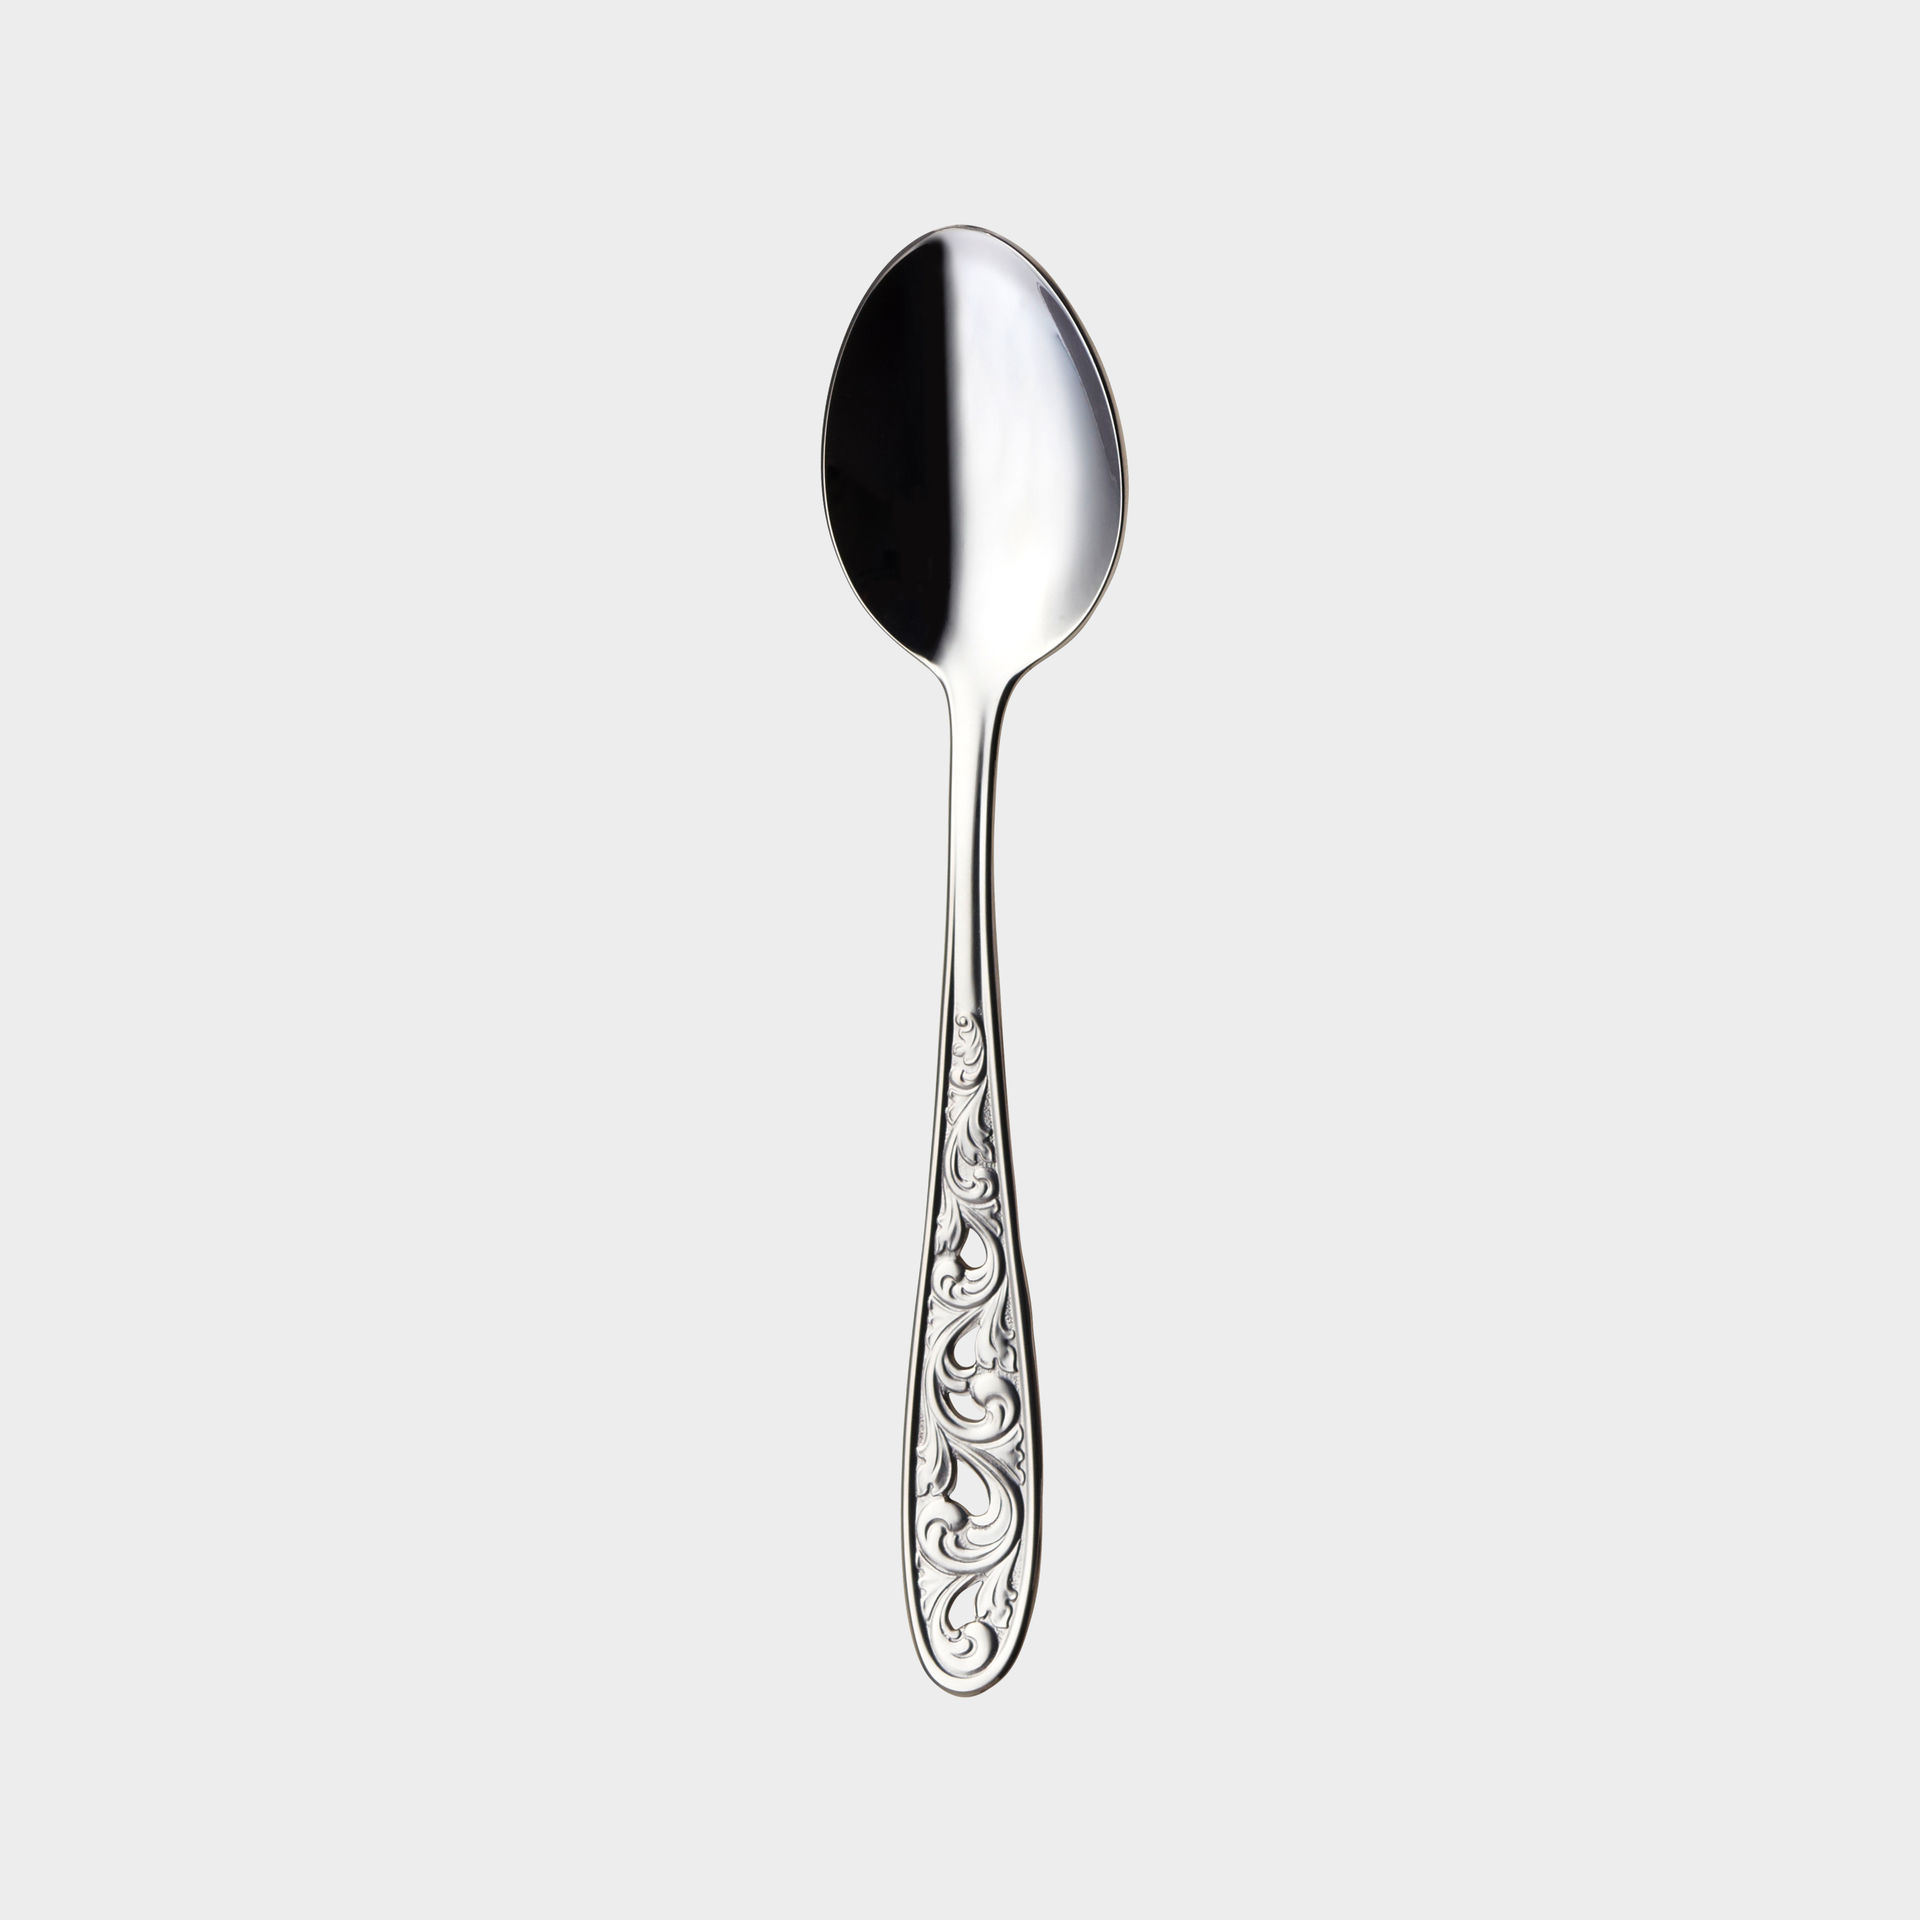 Kristin dessert spoon product image